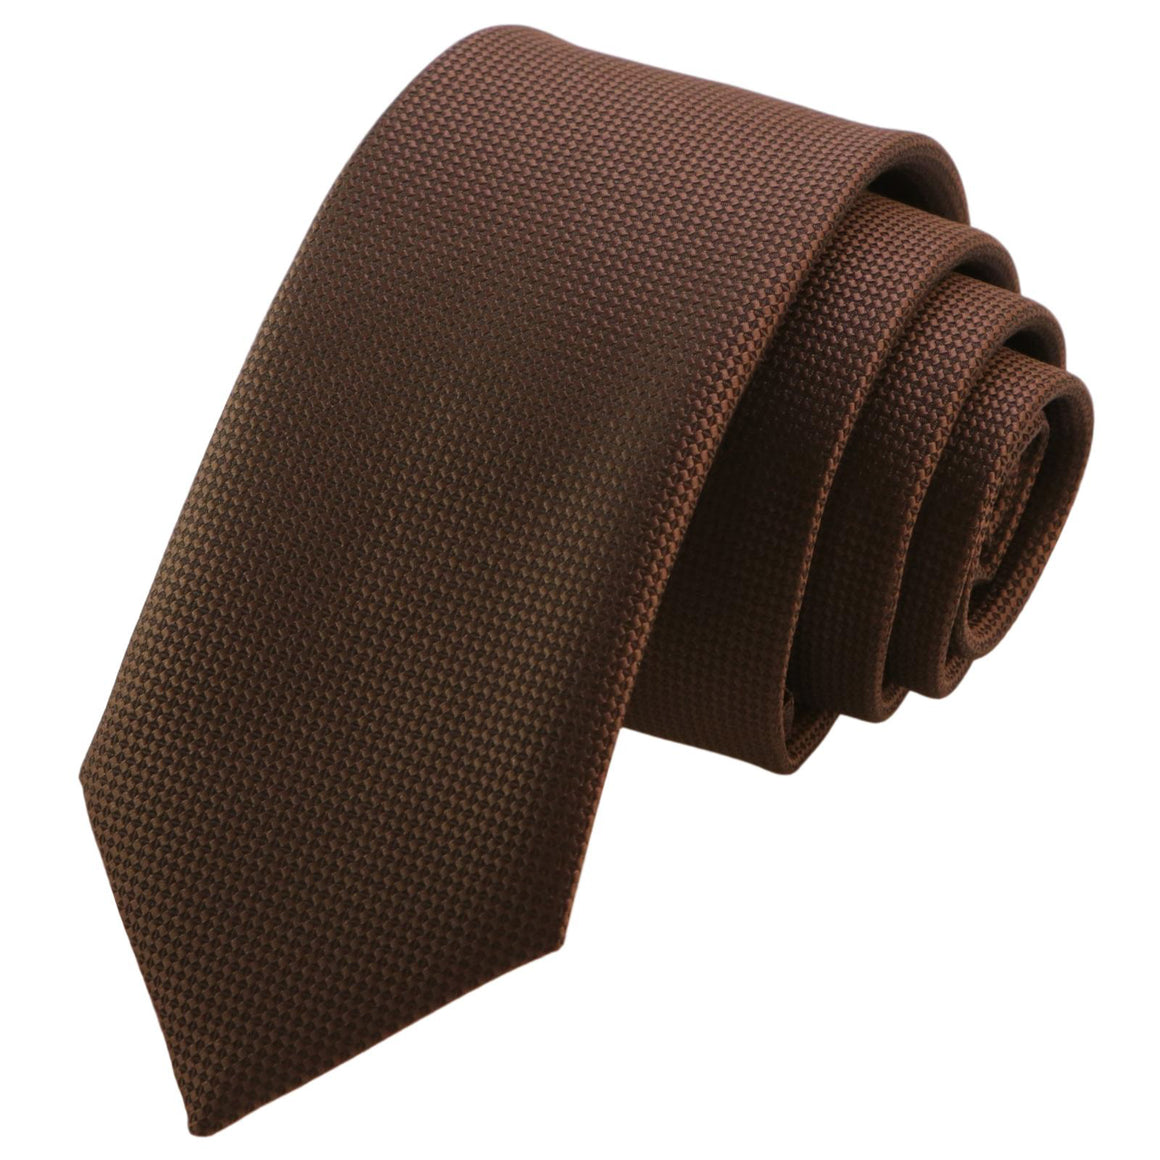 GASSANI Cravatta da uomo in tessuto a quadri marrone skinny, 6 cm, extra lunga